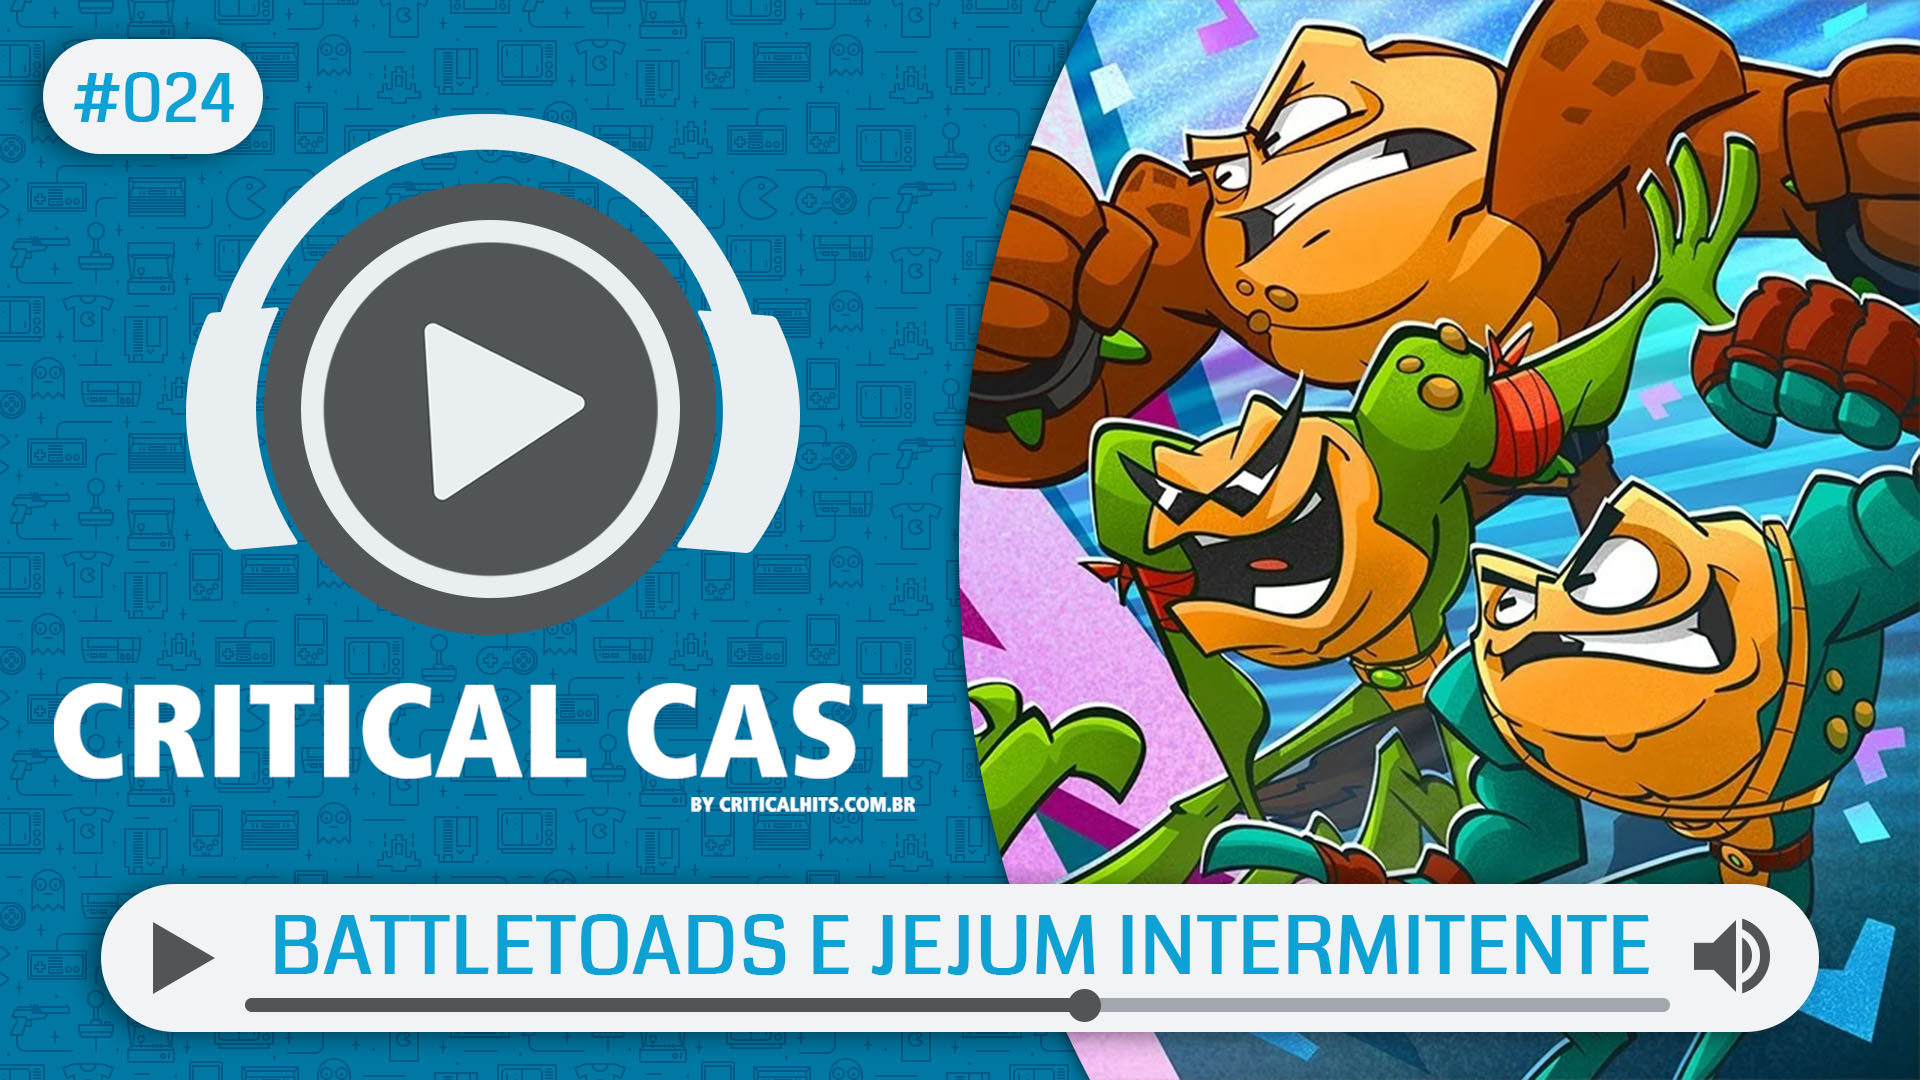 Critical Cast #024 - Battletoads e Jejum Intermitente